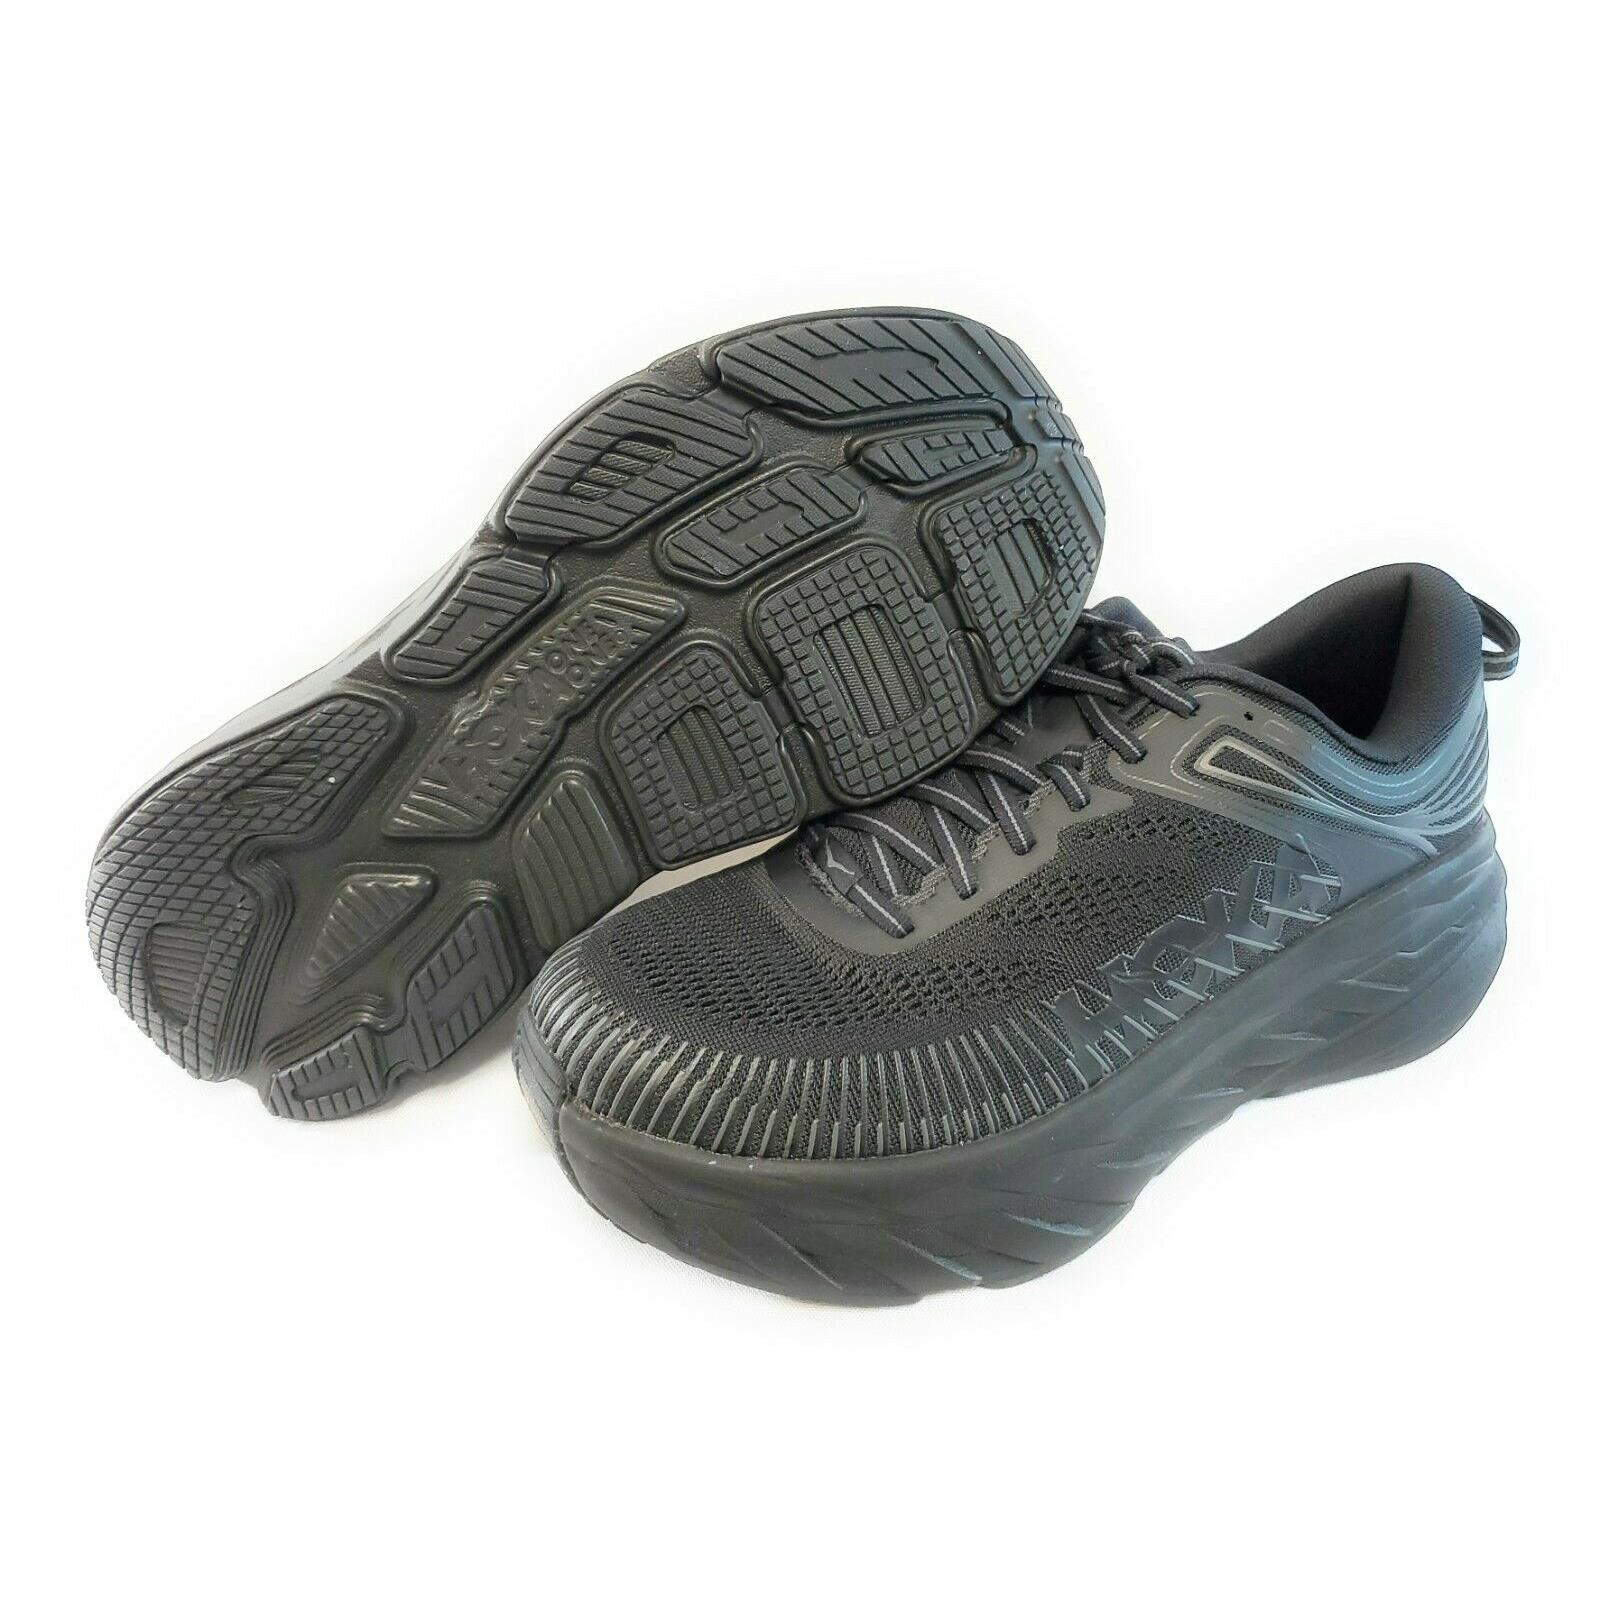 Womens Hoka One One Bondi 7 1110519 Bblc Black Running Sneakers Shoes